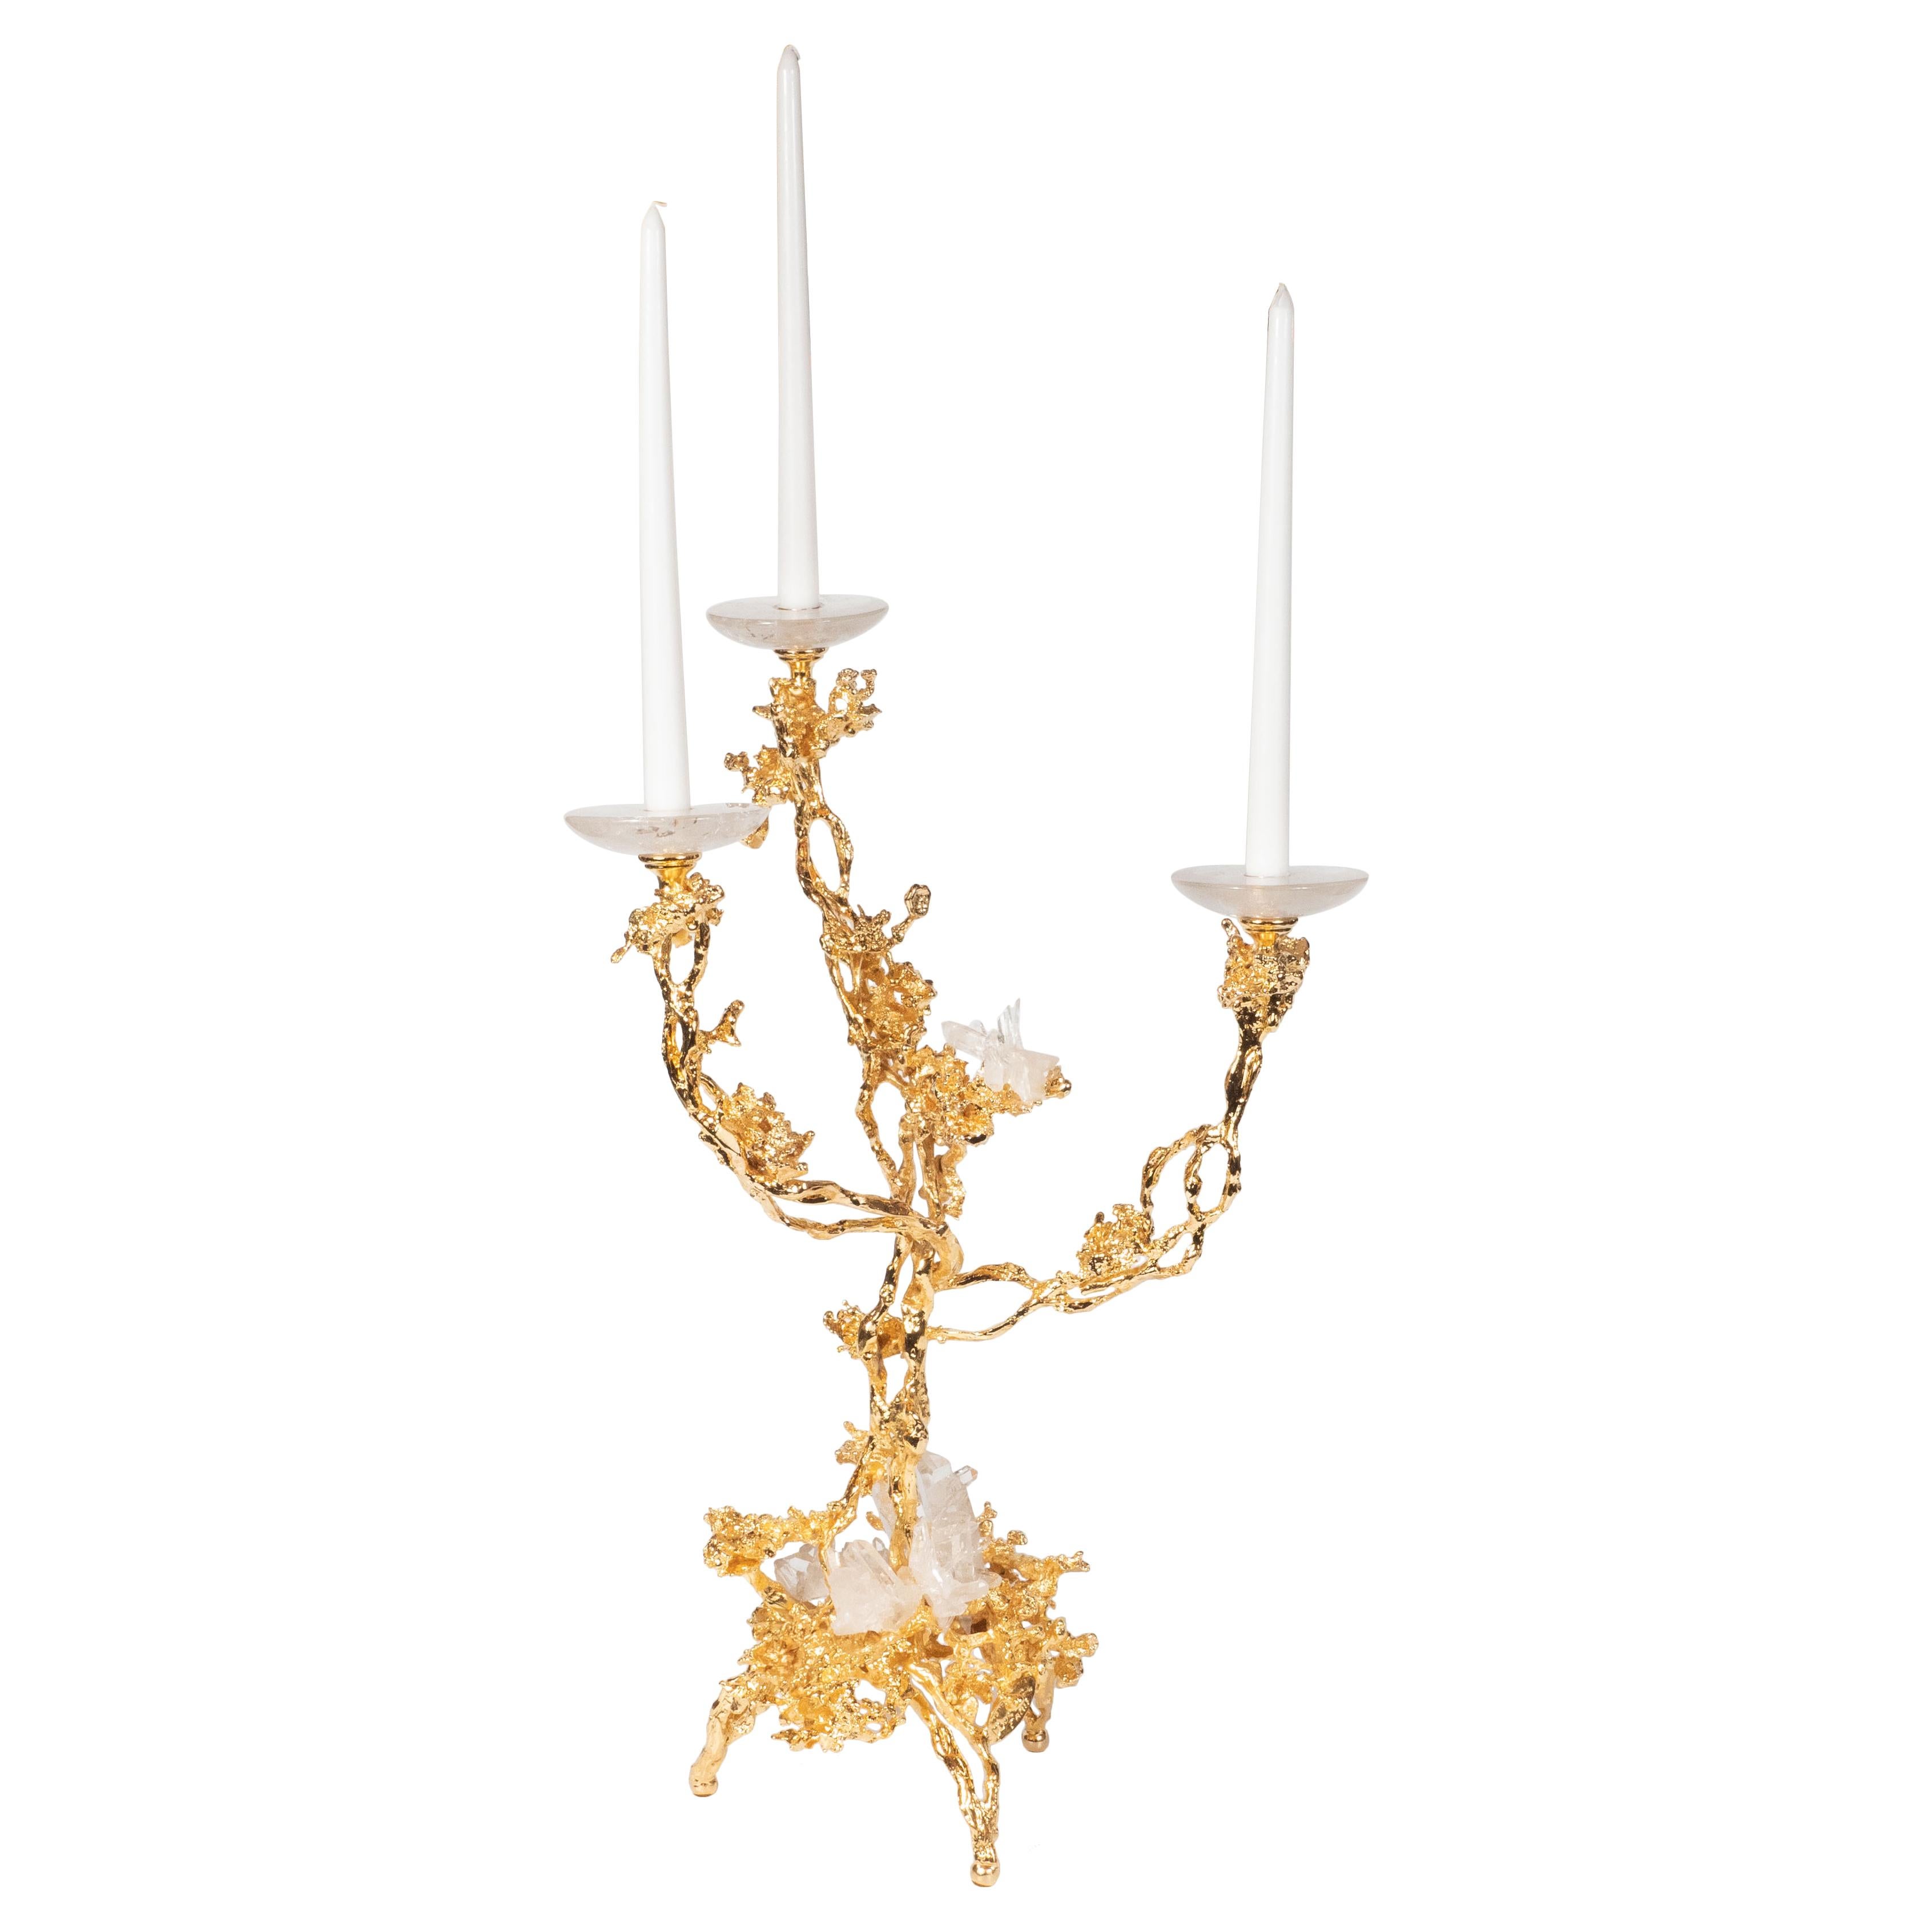 Pair of 24Kt Gold Triple Branch Candlesticks w/ Rock Crystals by Claude Boeltz 12